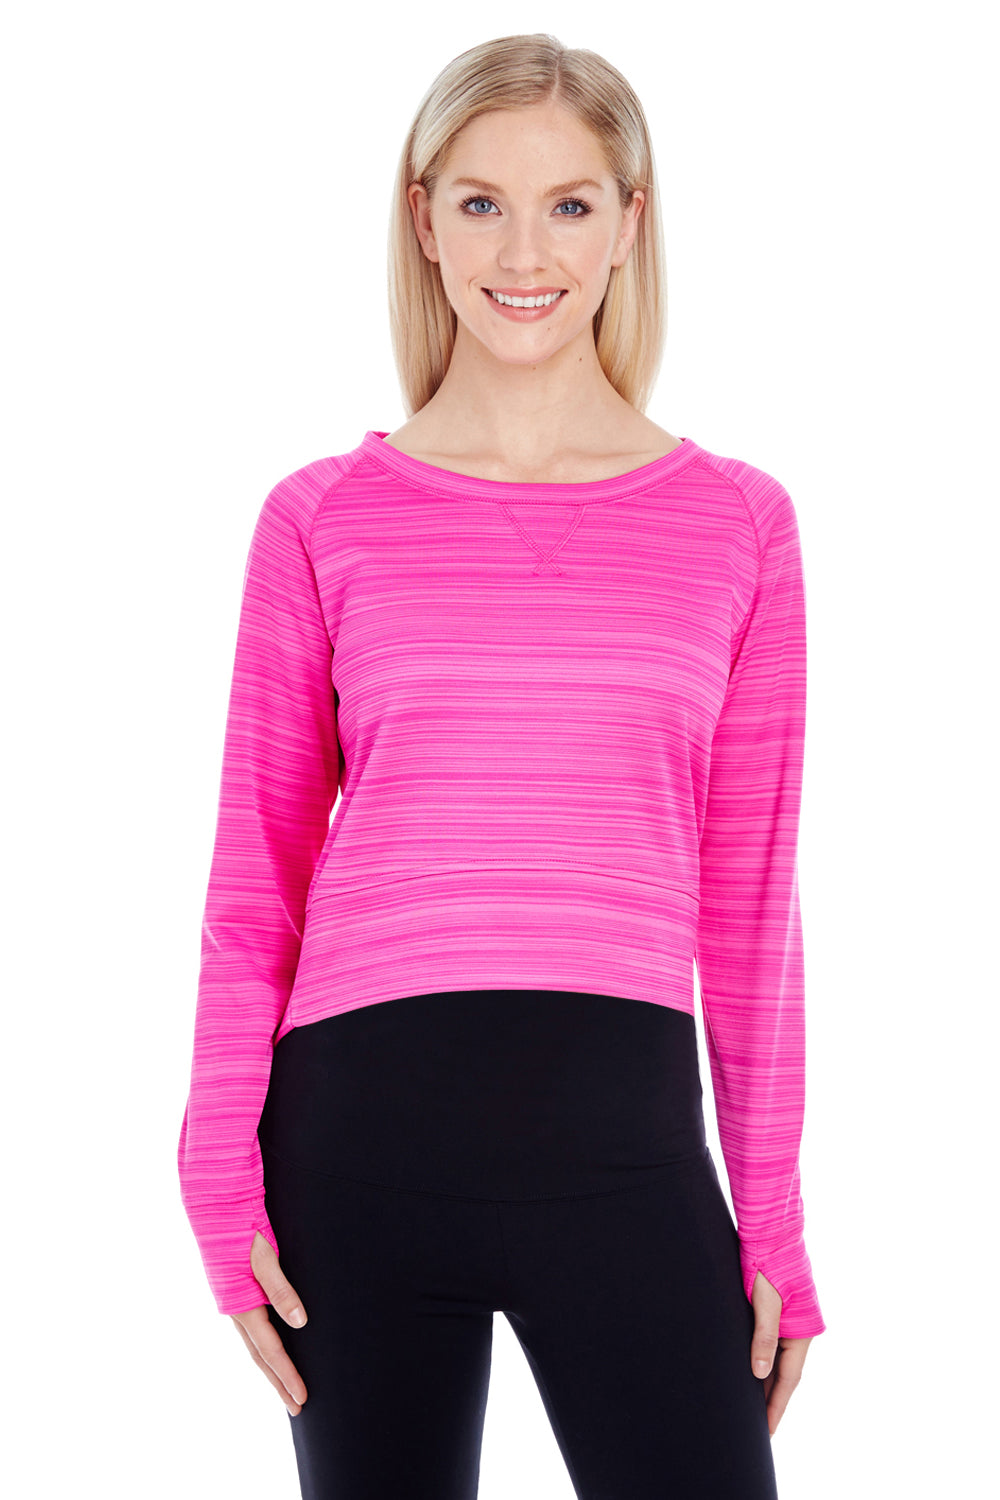 J America JA8663 Womens Odyssey Fleece Crewneck Sweatshirt Passion Pink Front